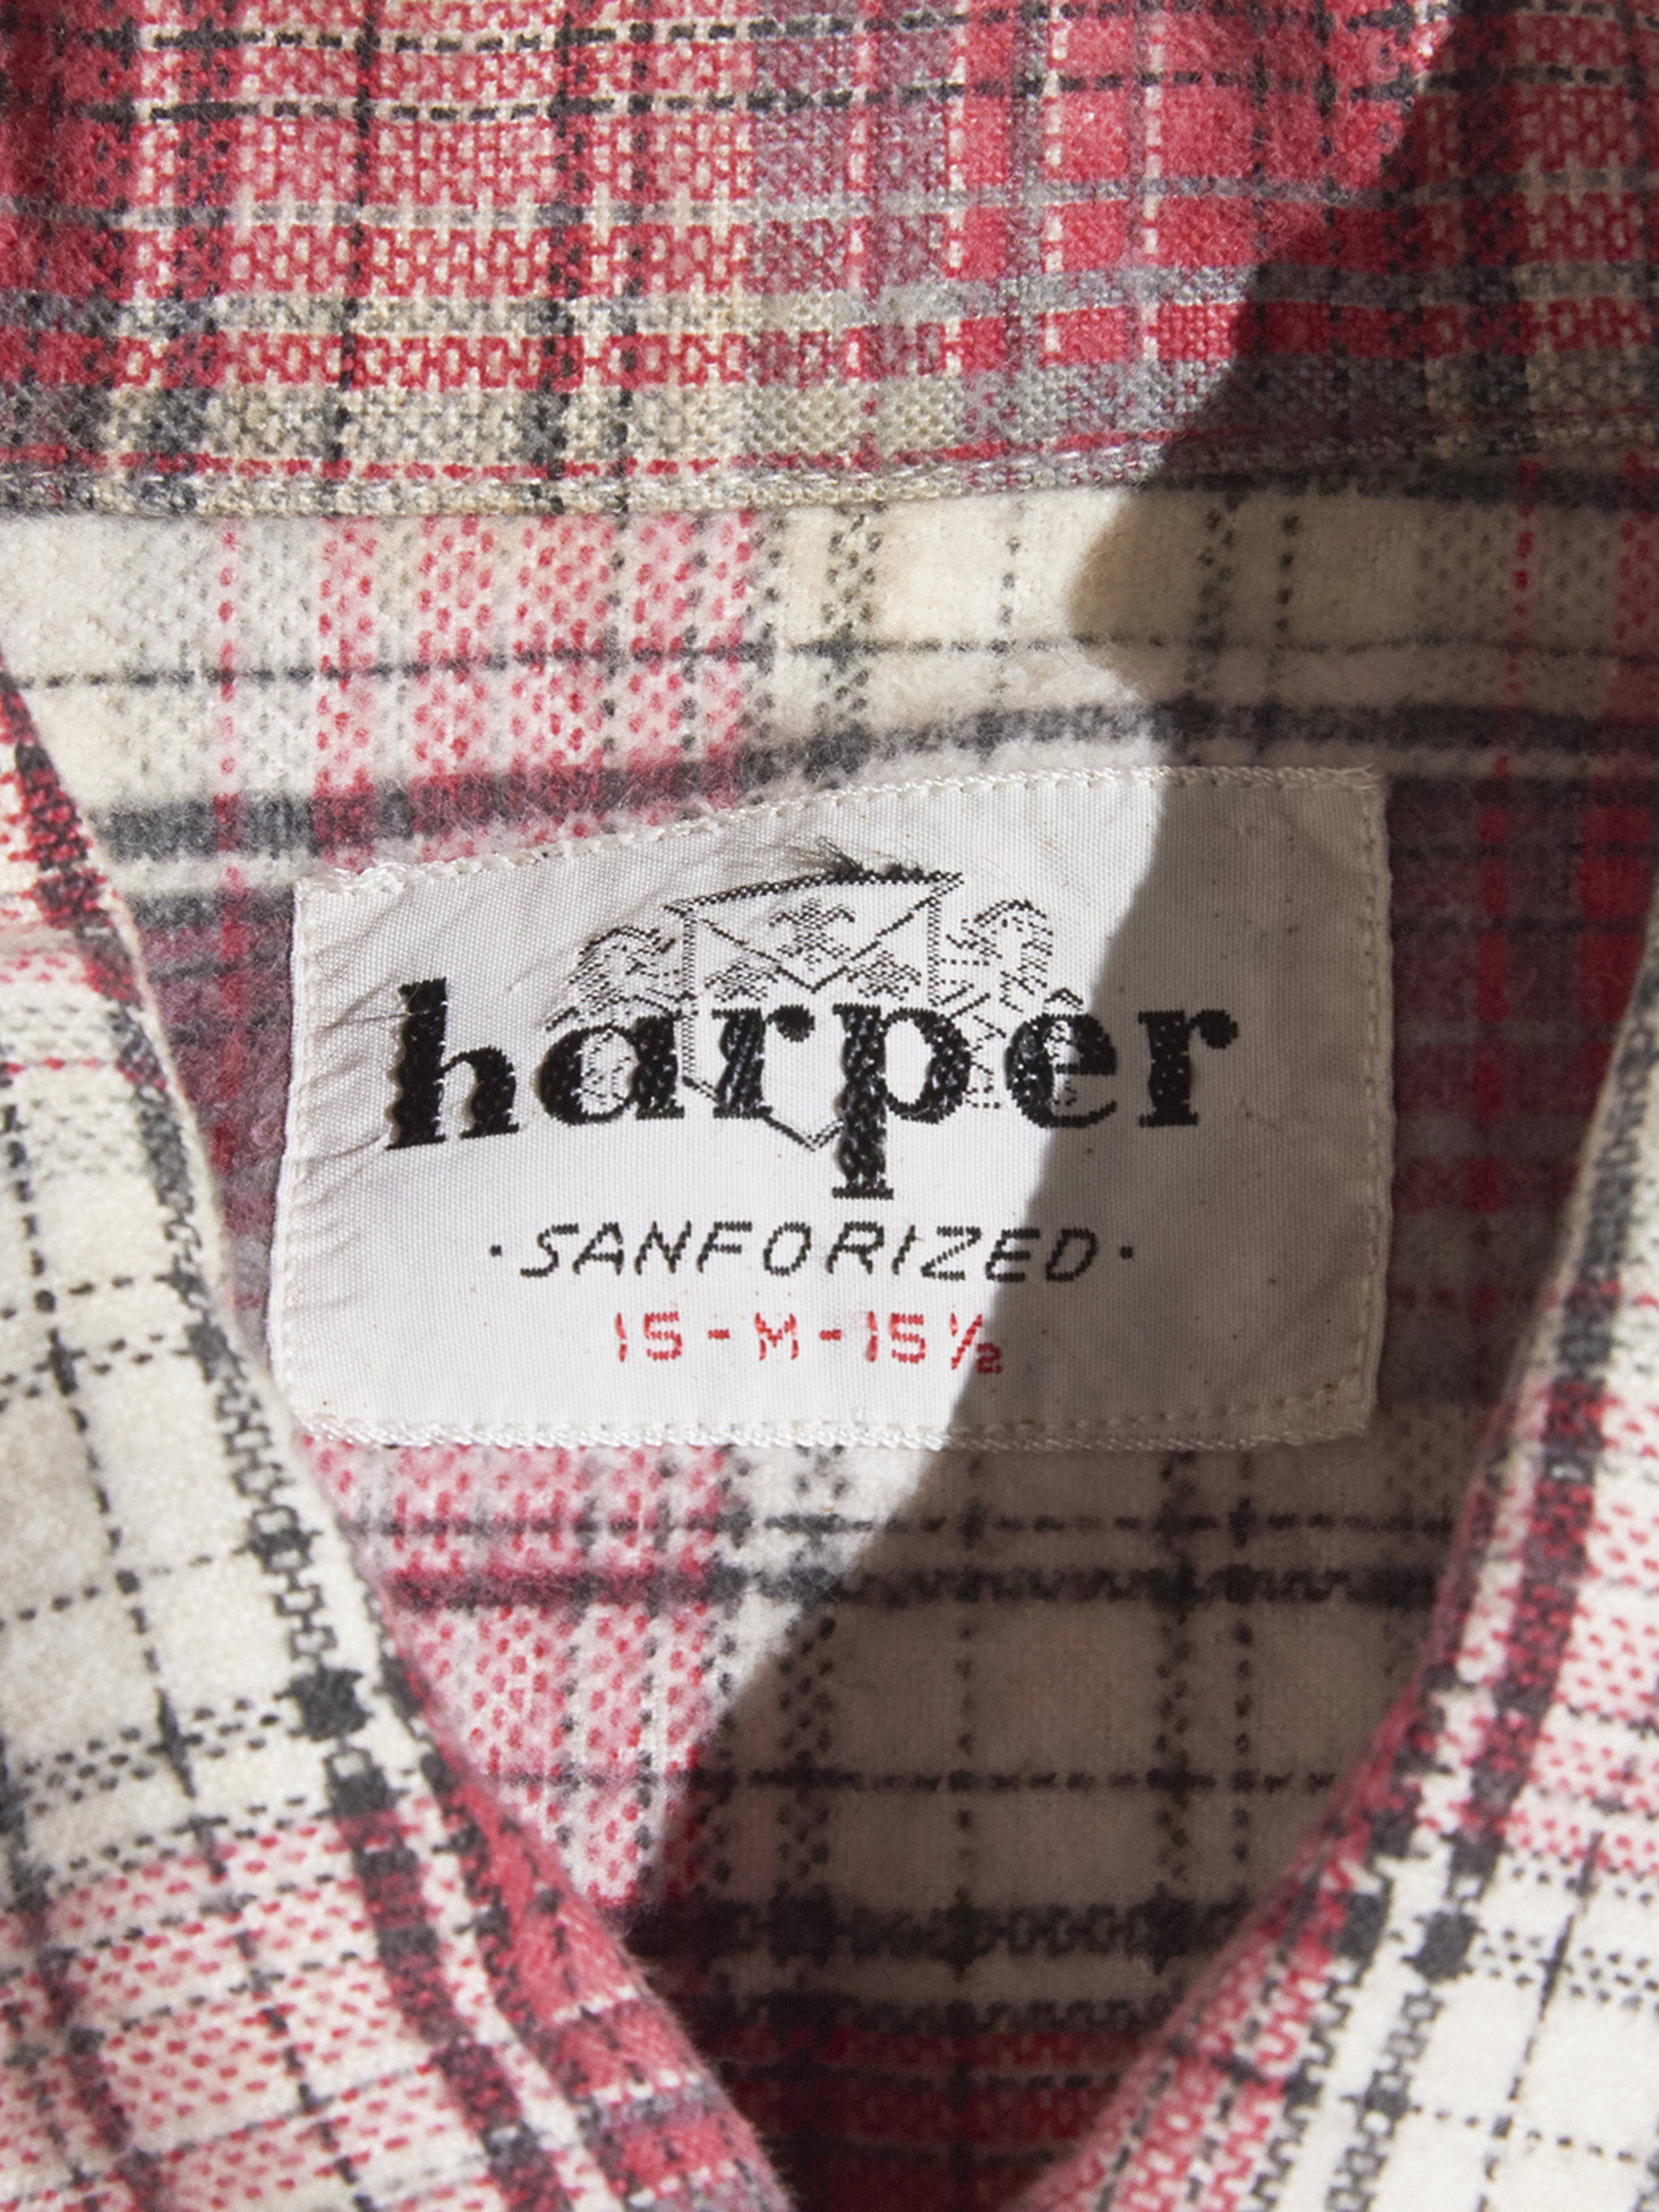 1960s "harper" print flannel check shirt -RED-